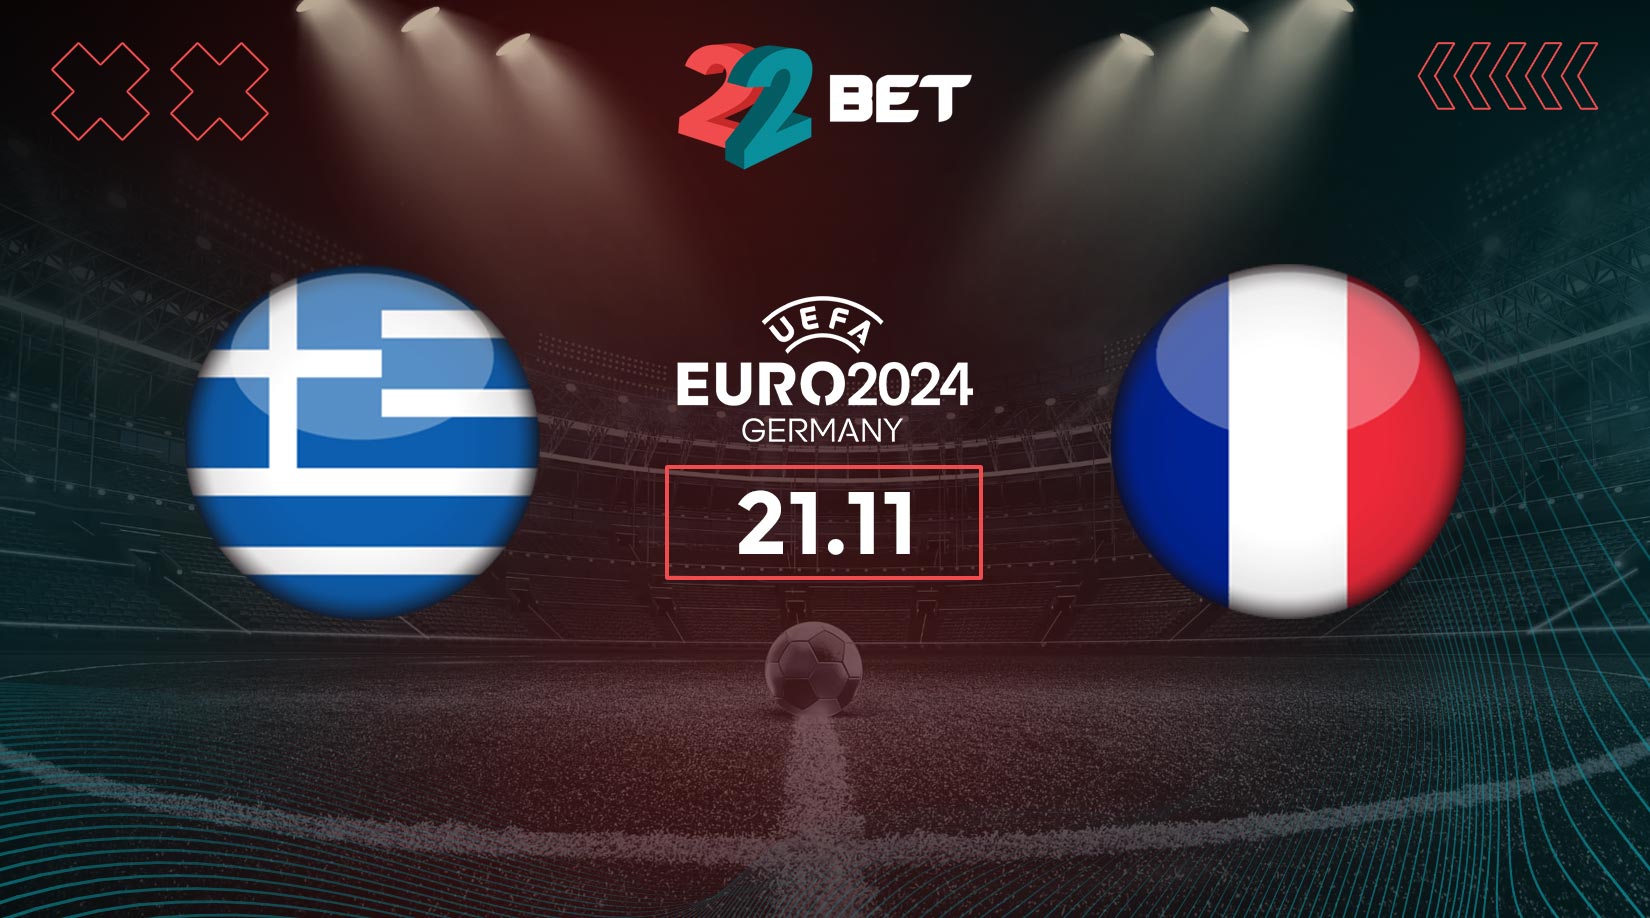 Greece vs France Prediction: Euro 2024 Match on 21.11.2023